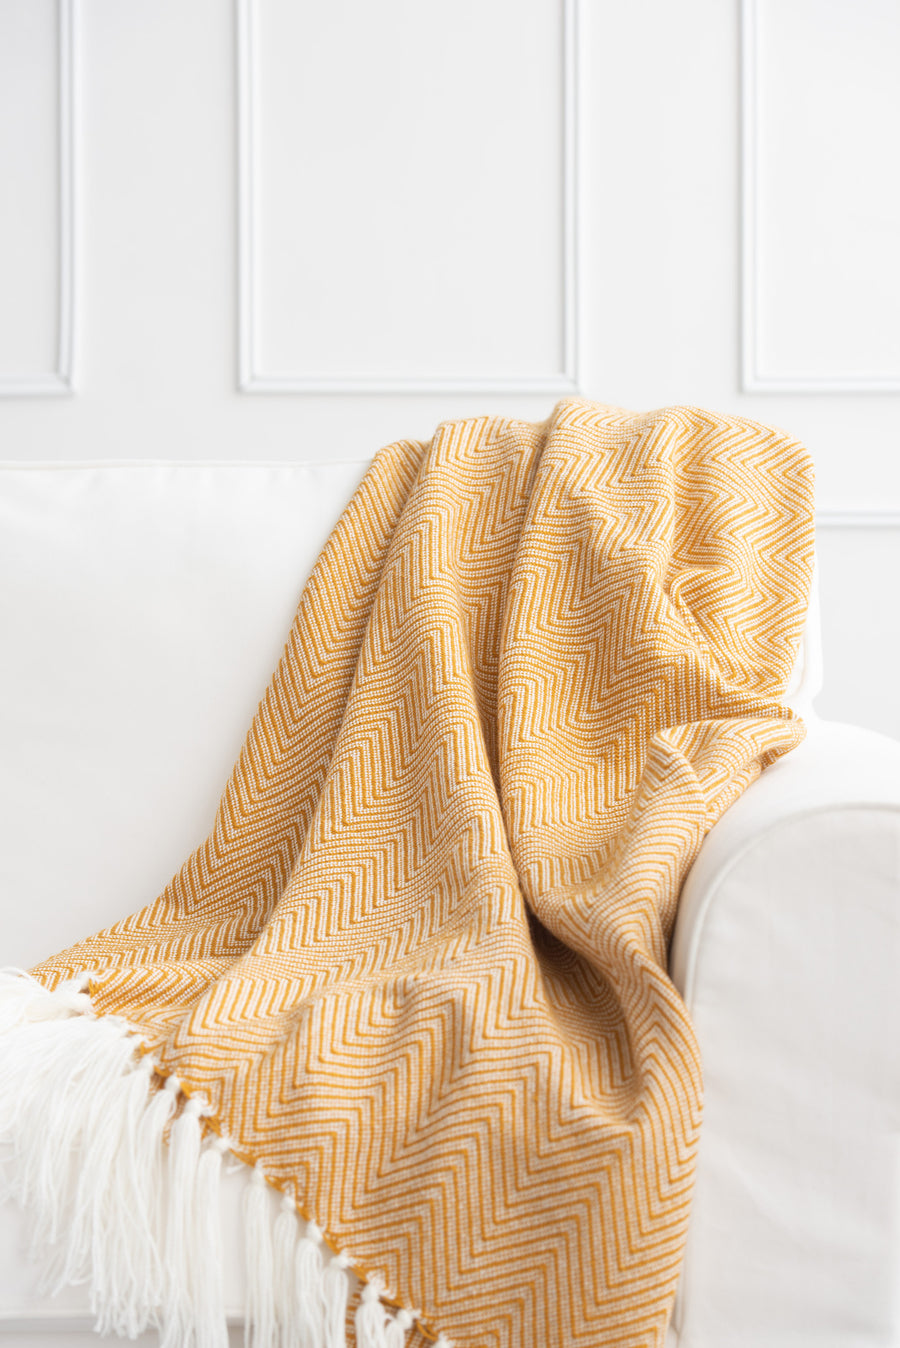 Classic Knitted Throw Blanket with Fringes, Neda, Herringbone Stripes, Mustard Yellow, 50